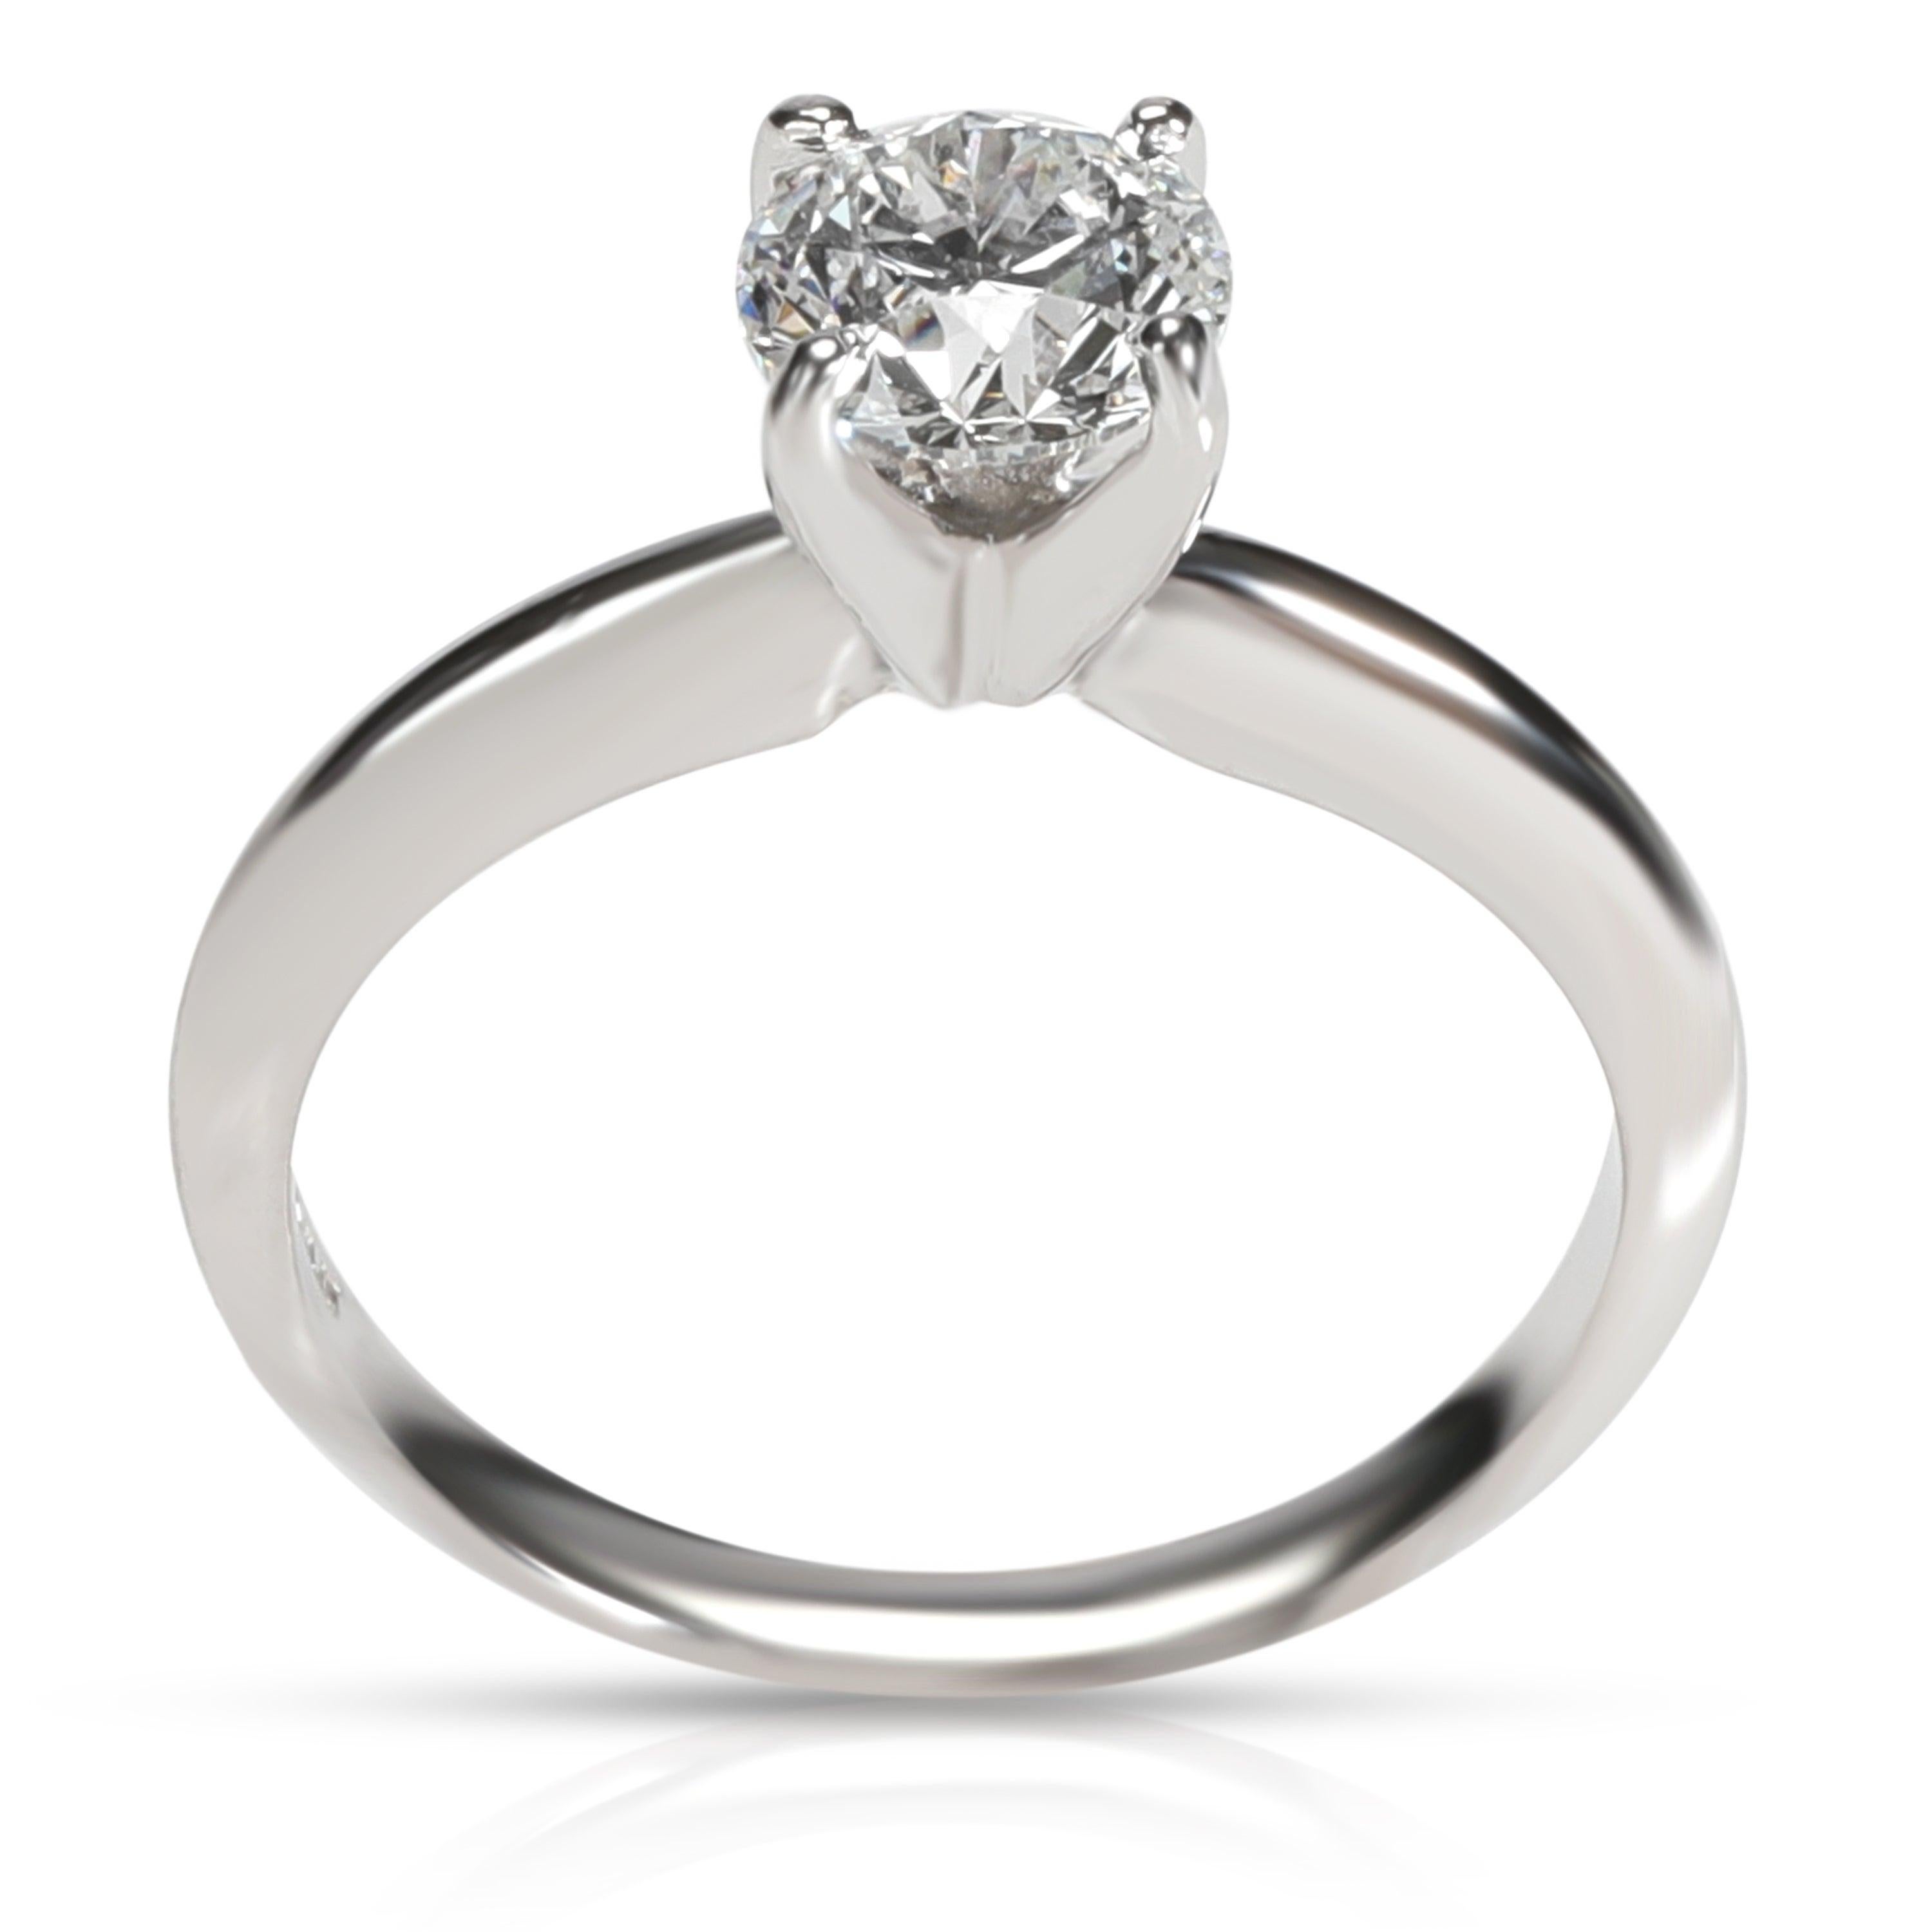 Round Cut Forevermark Solitaire Diamond Ring in Platinum E SI1 0.9 Carat